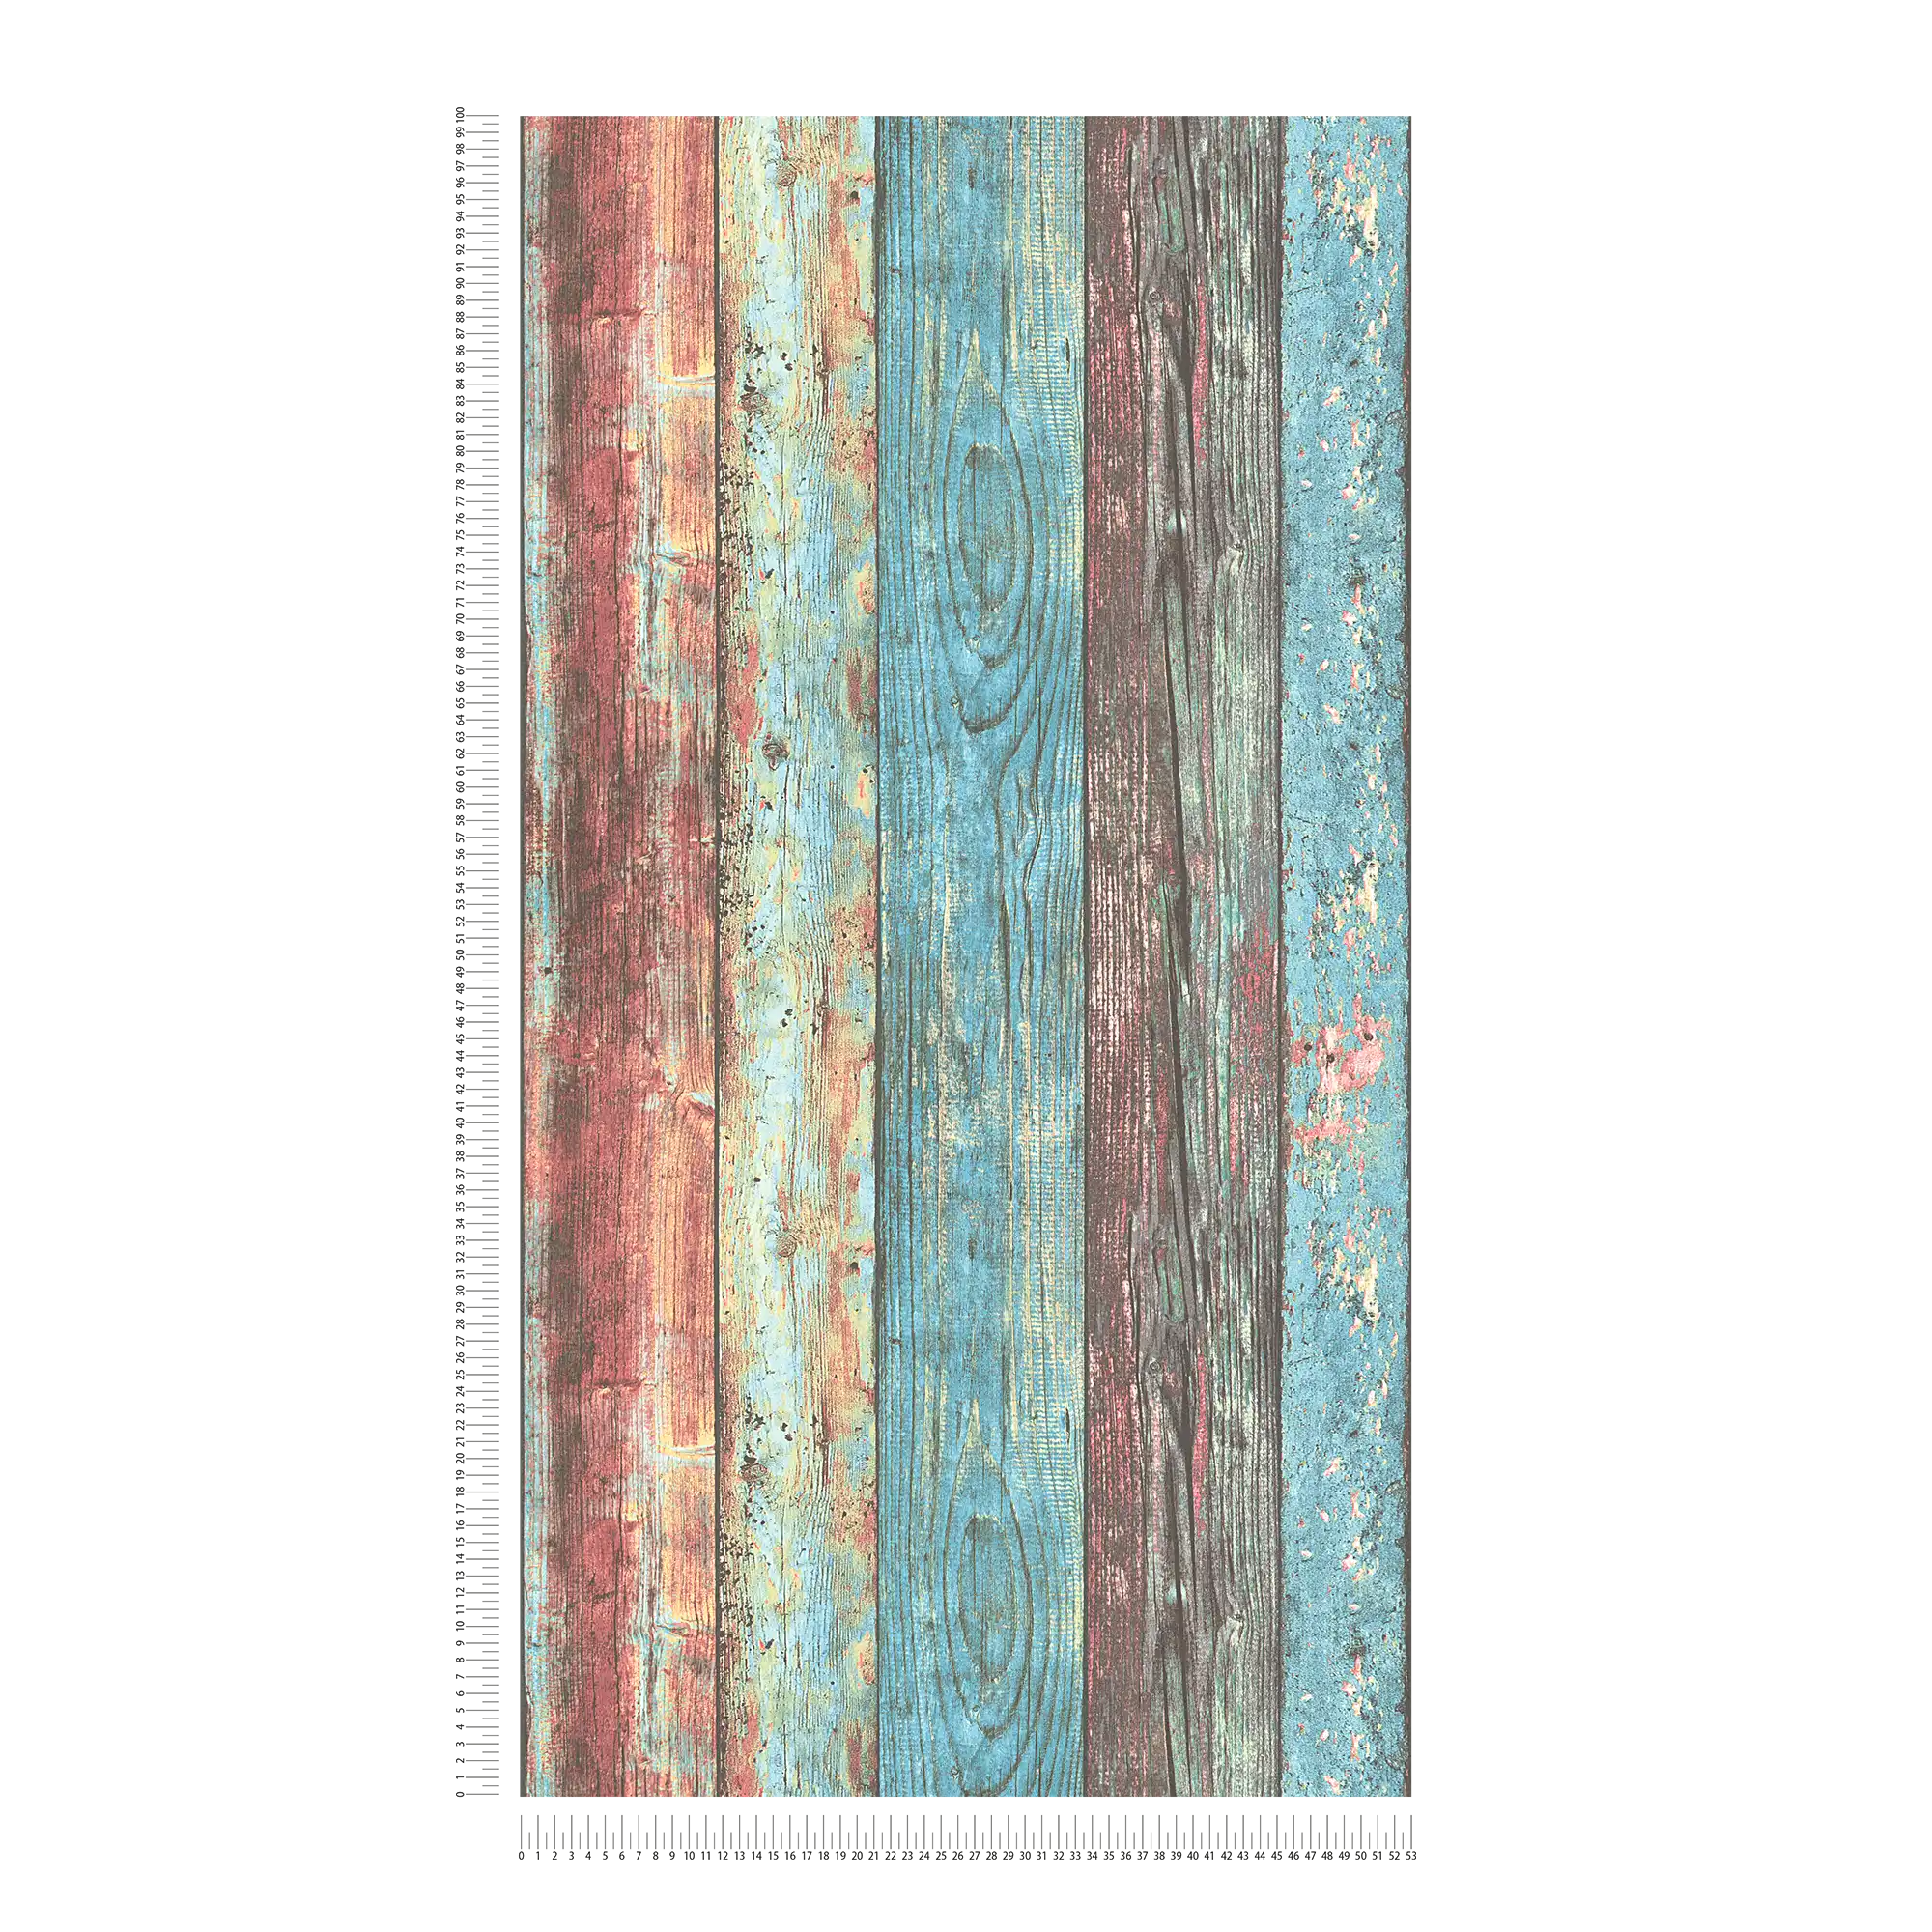             Bunte Holztapete Shabby Chic Style mit Bretter-Muster – Blau, Rot, Braun
        